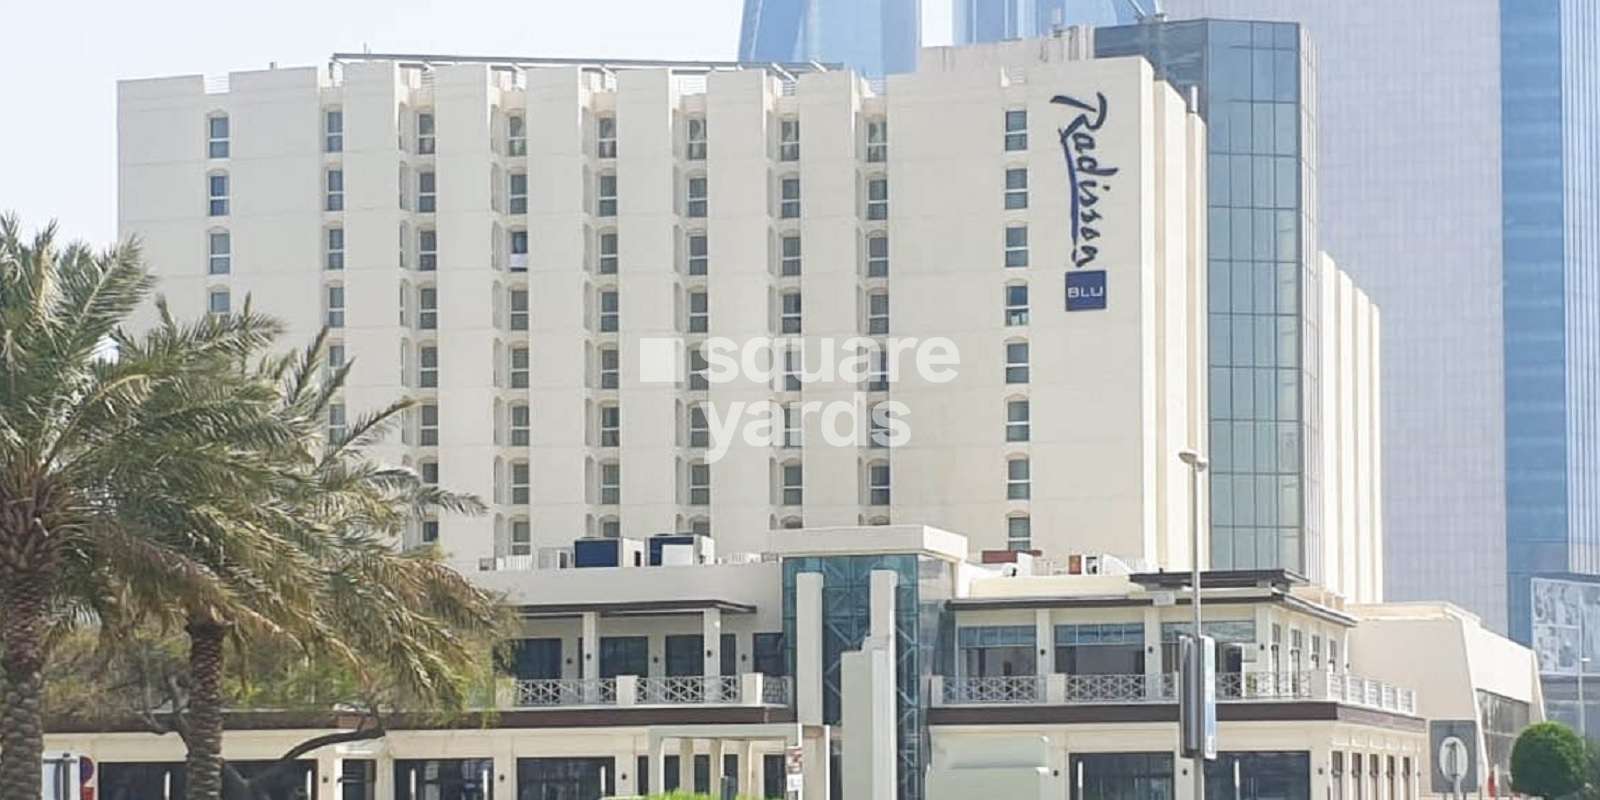 Radisson Blu Hotel Deira Cover Image